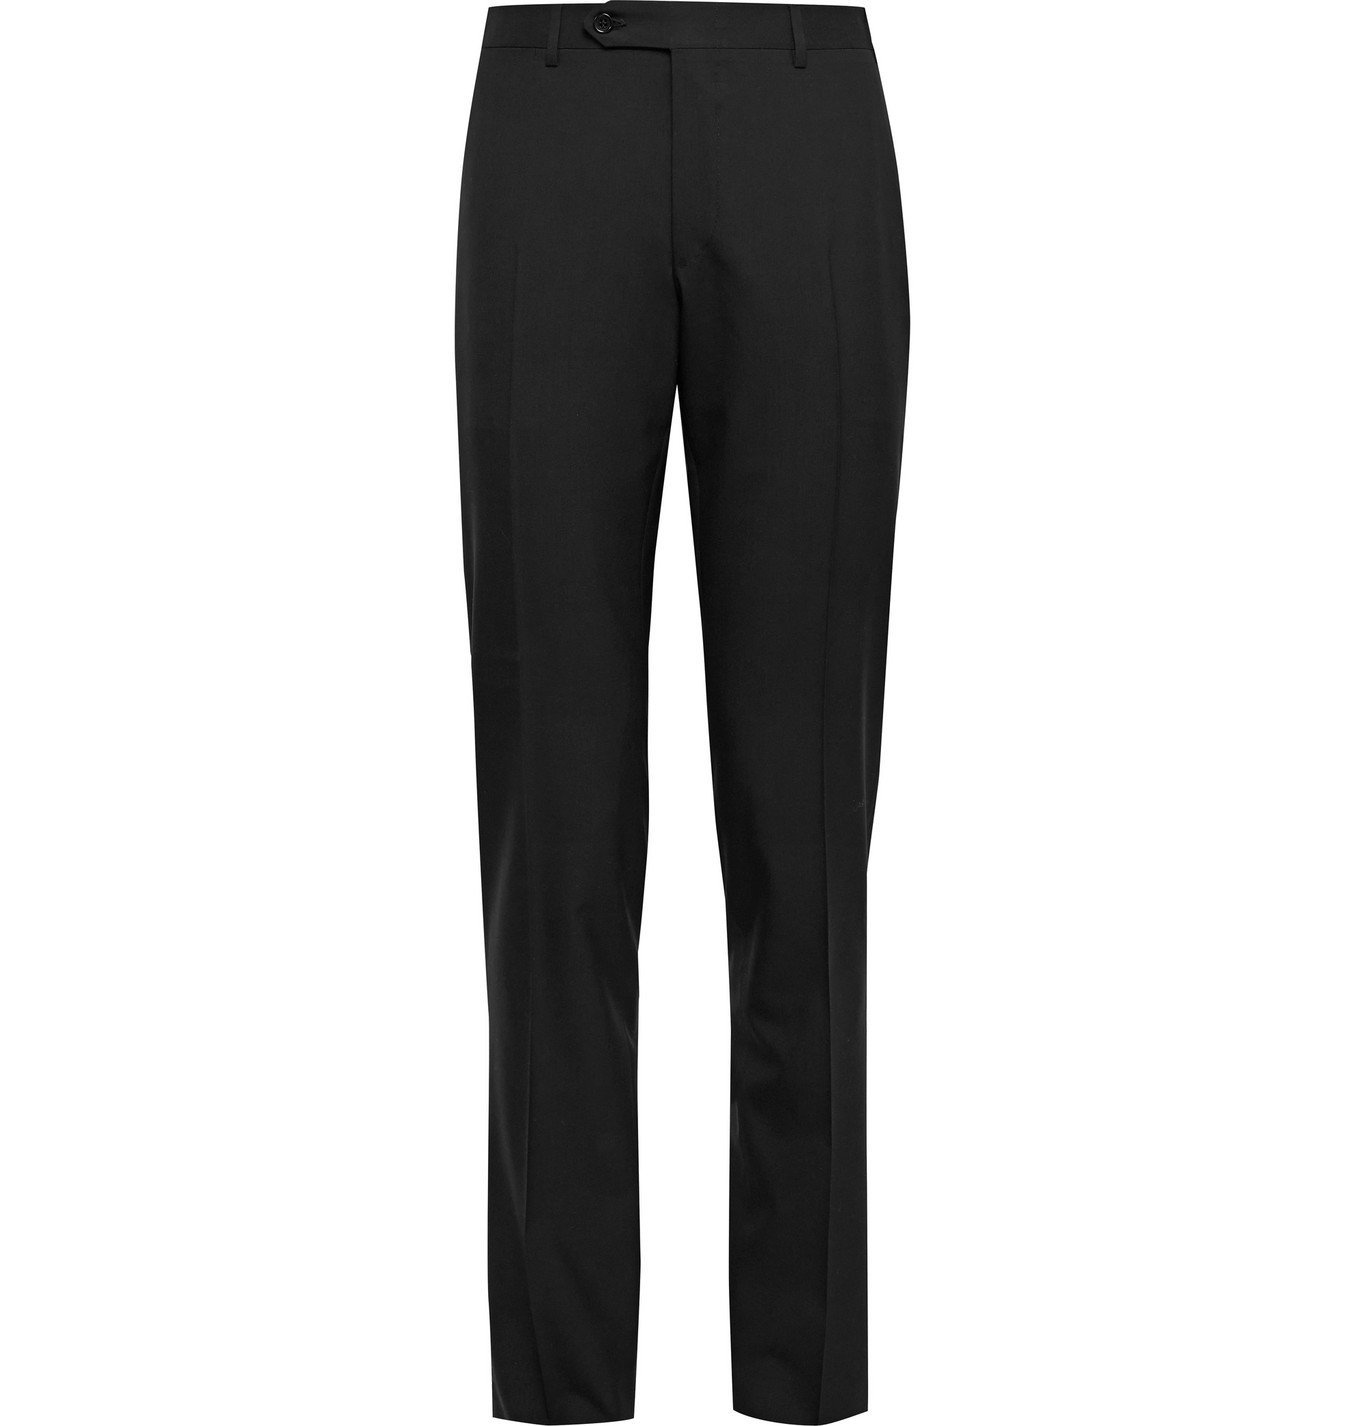 CANALI - Slim-Fit Super 120s Wool Trousers - Black Canali